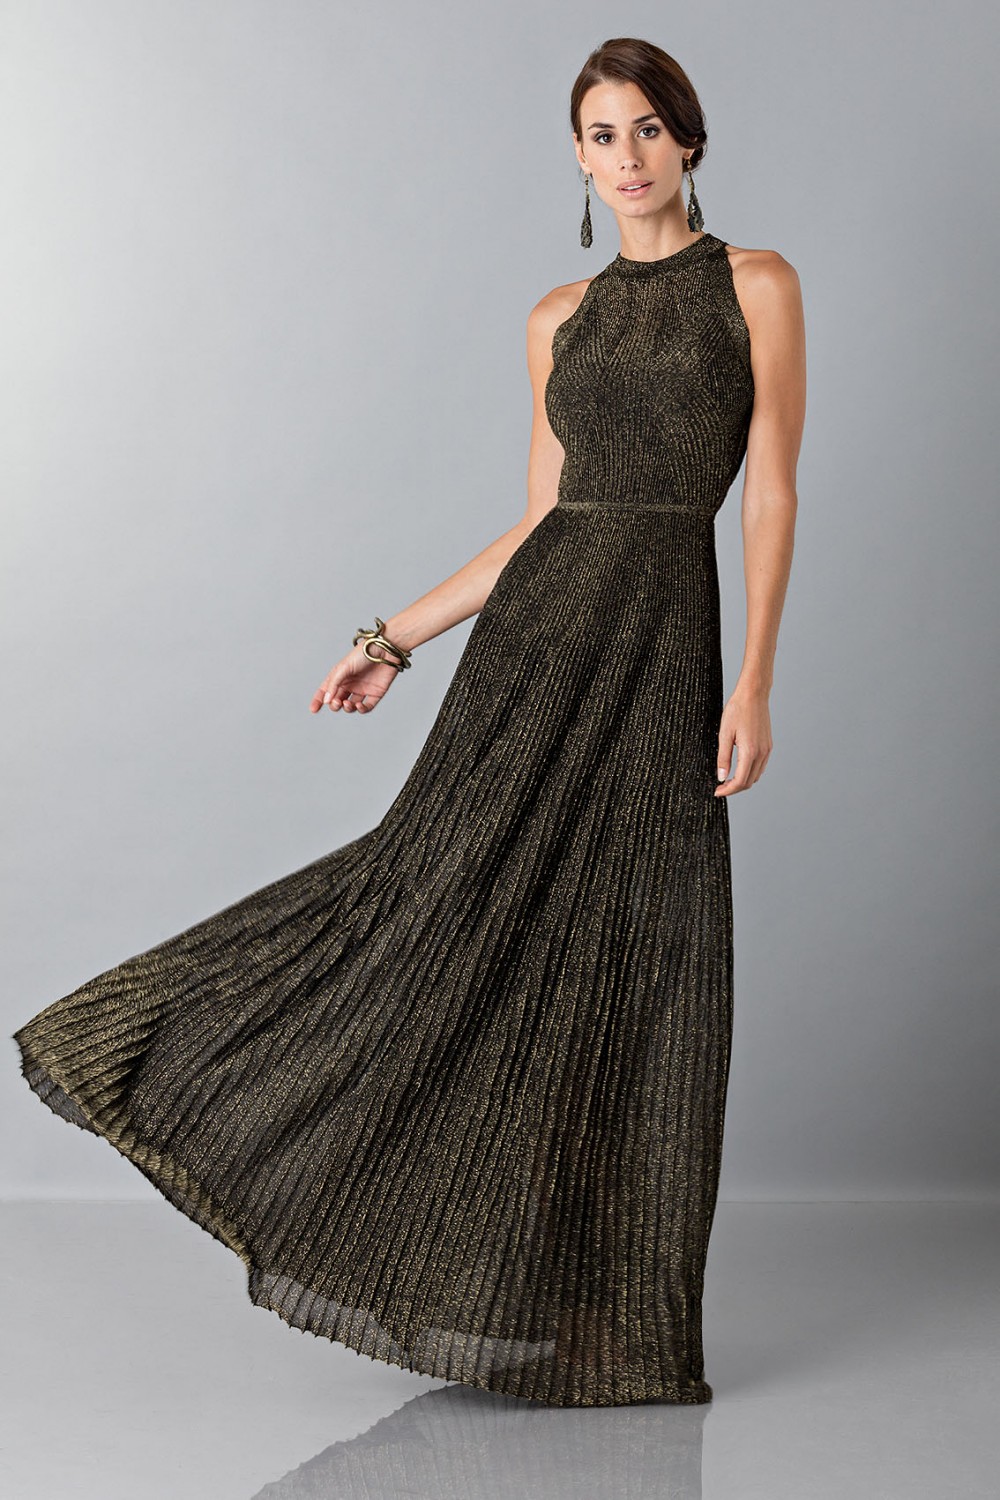 Vendita Abbigliamento Usato FIrmato - Dress with gold textures - Vionnet - Drexcode -3